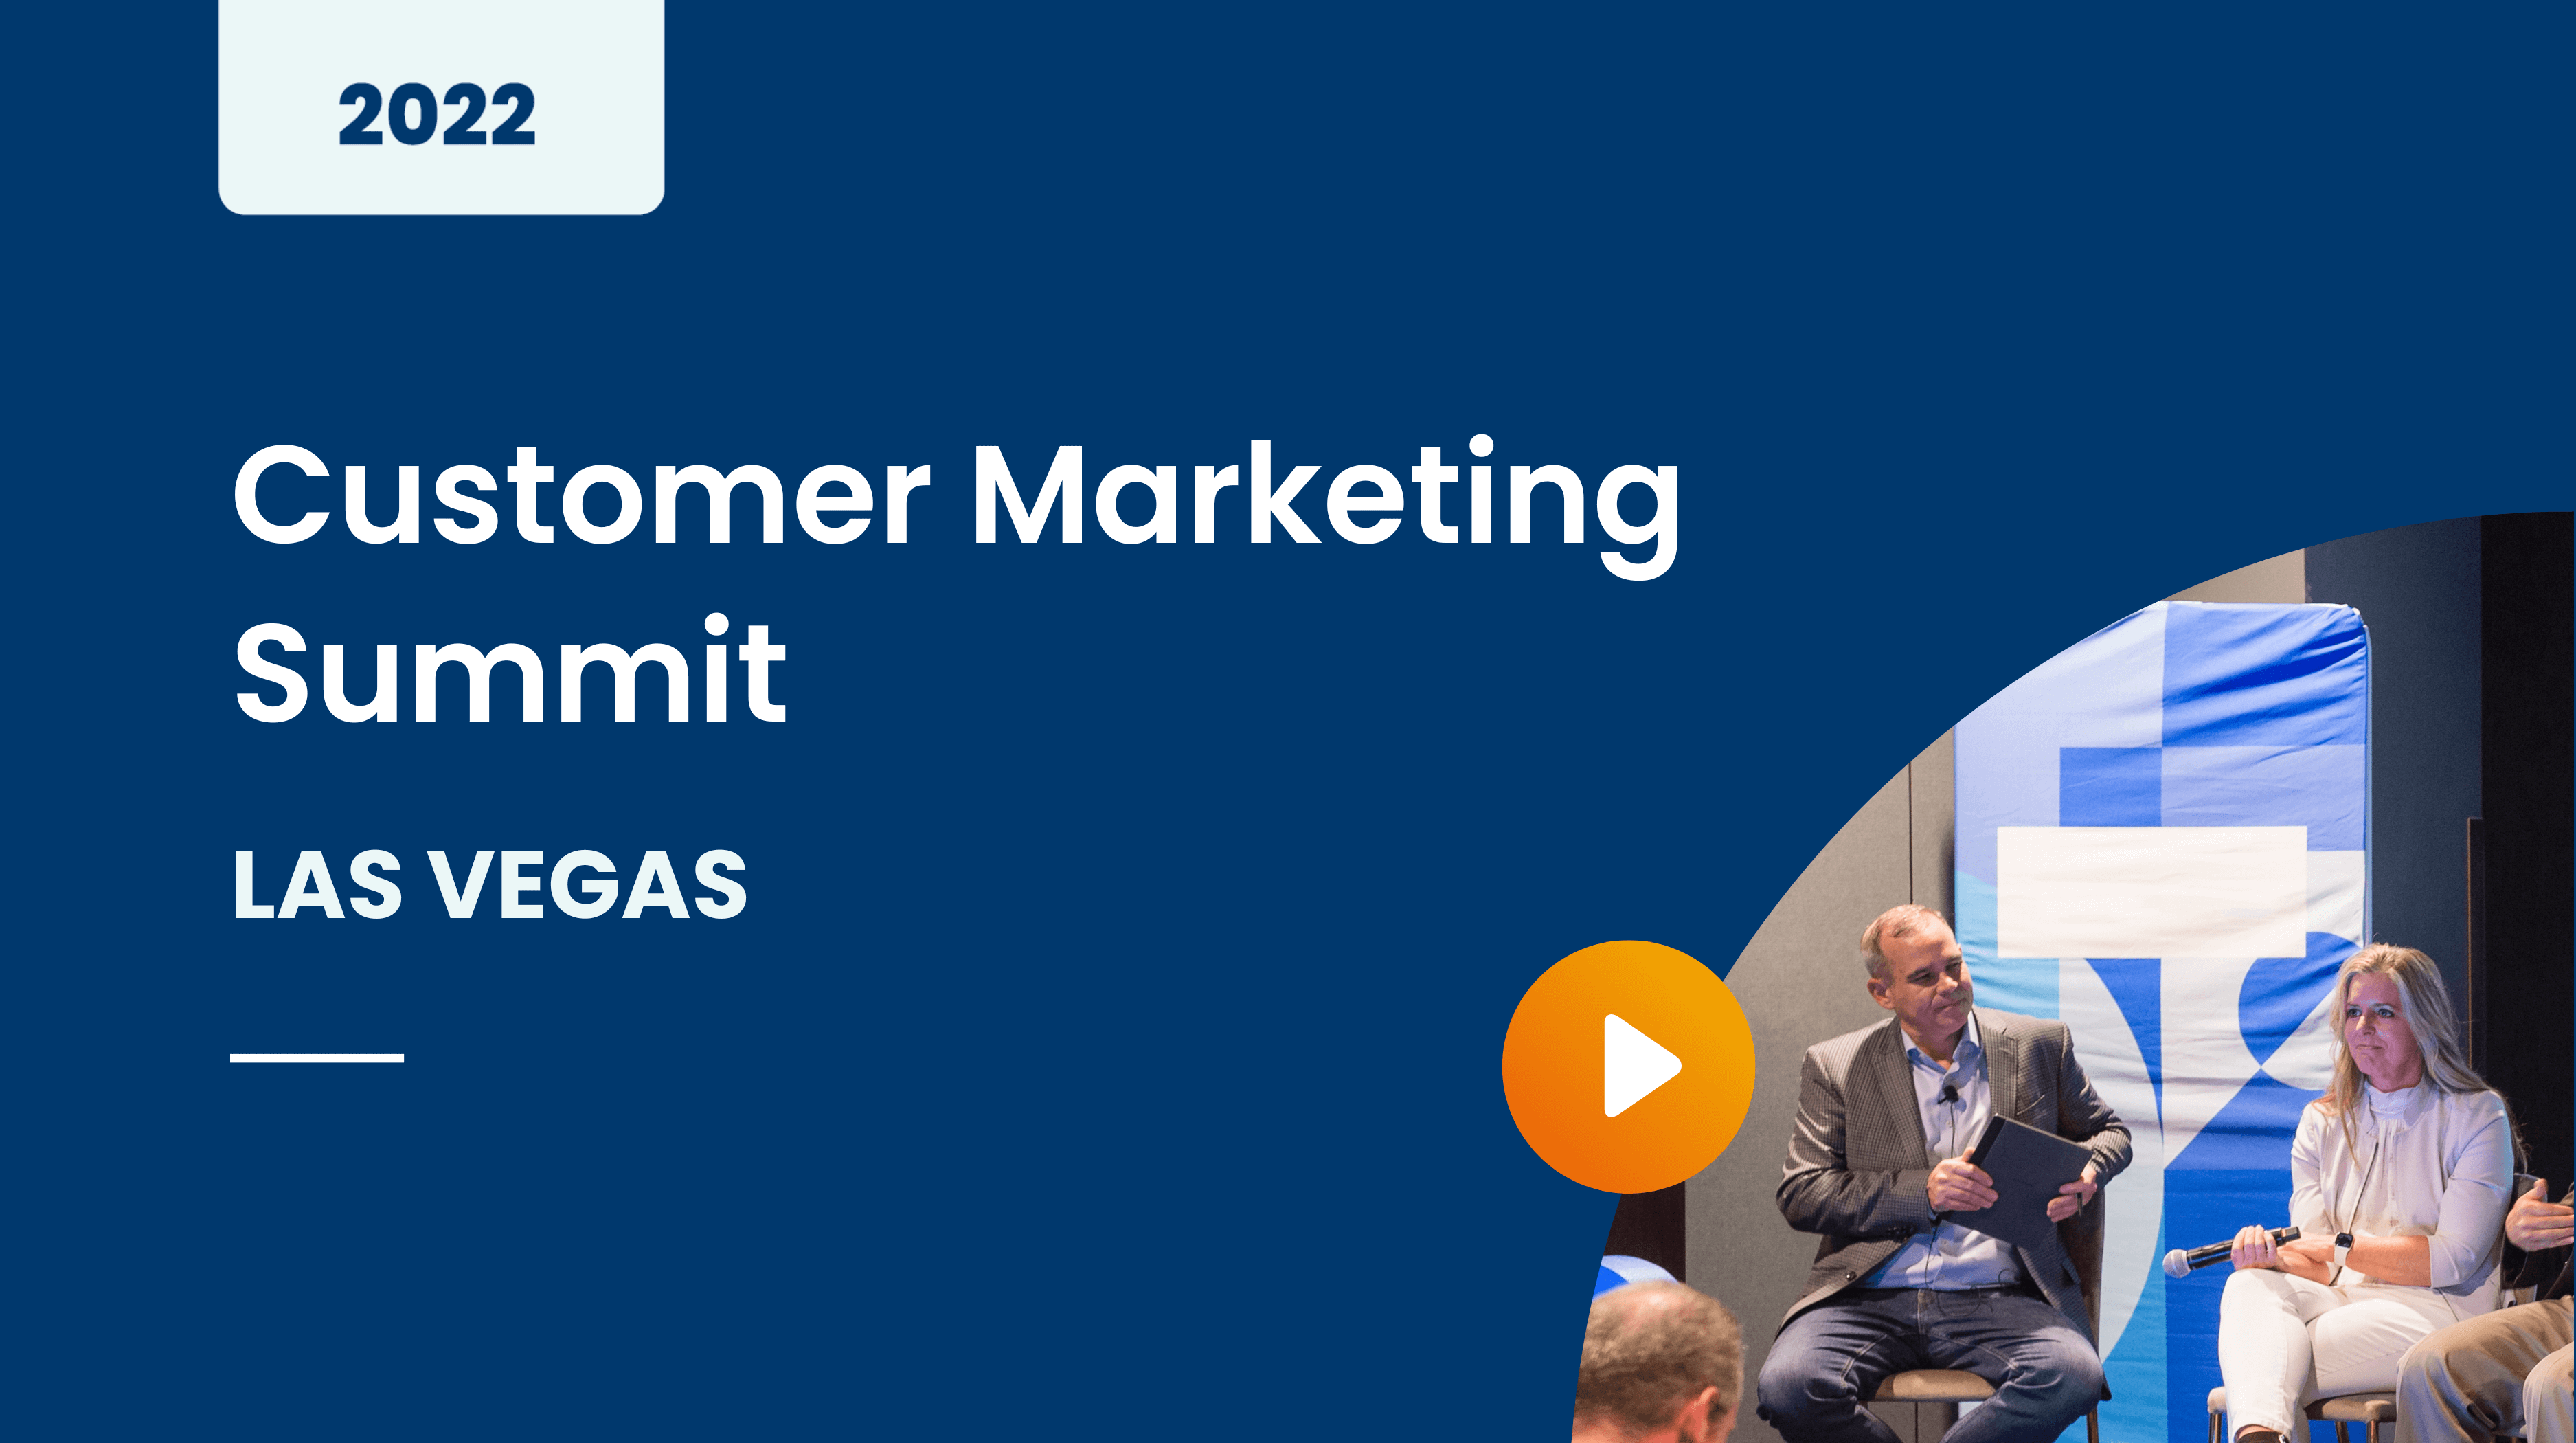 Customer Marketing Summit Las Vegas 2022